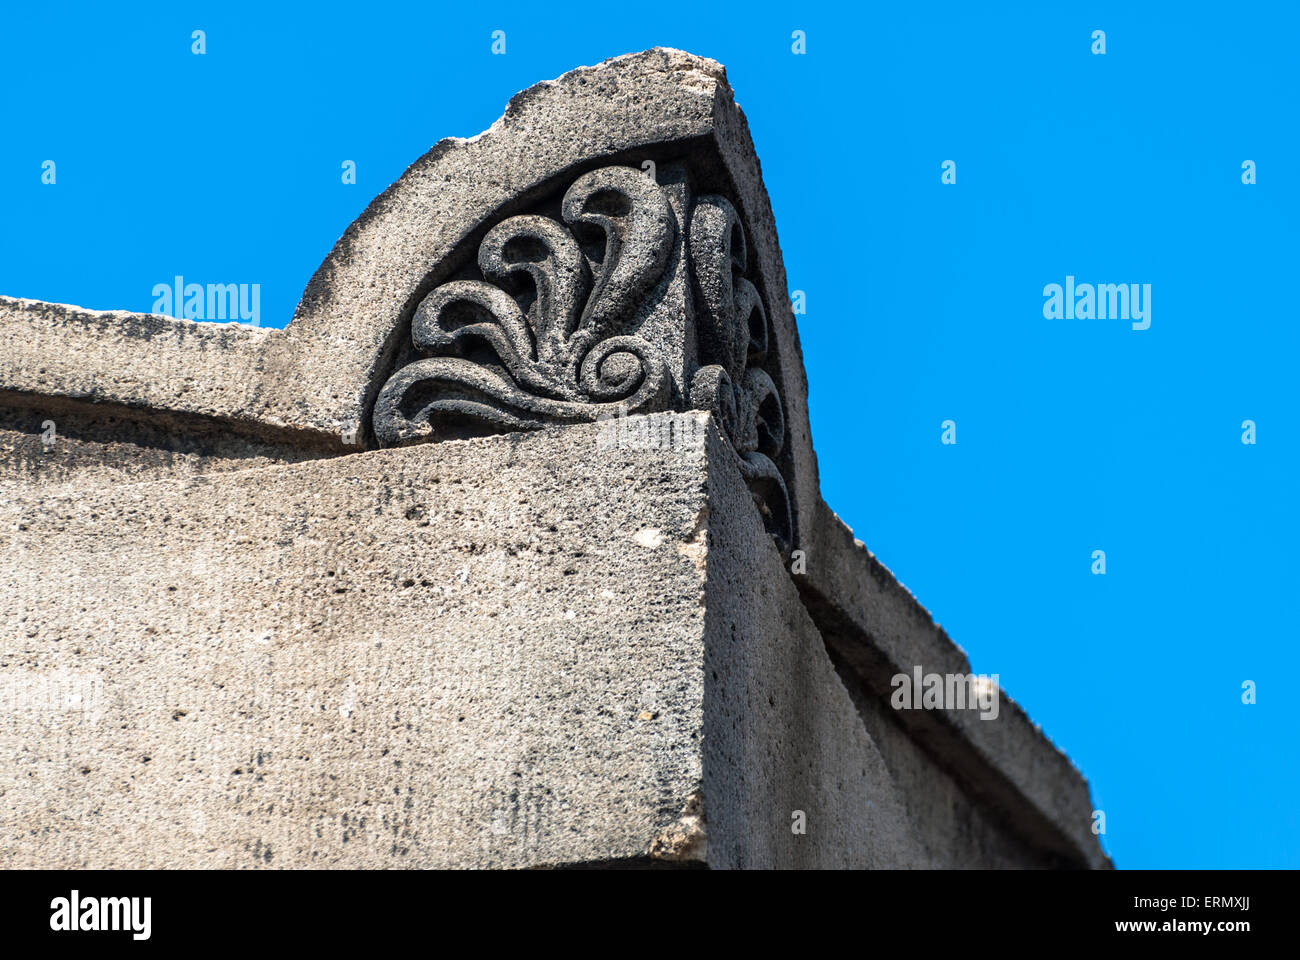 Corner stone with decorative ocean wave motif. Stock Photo